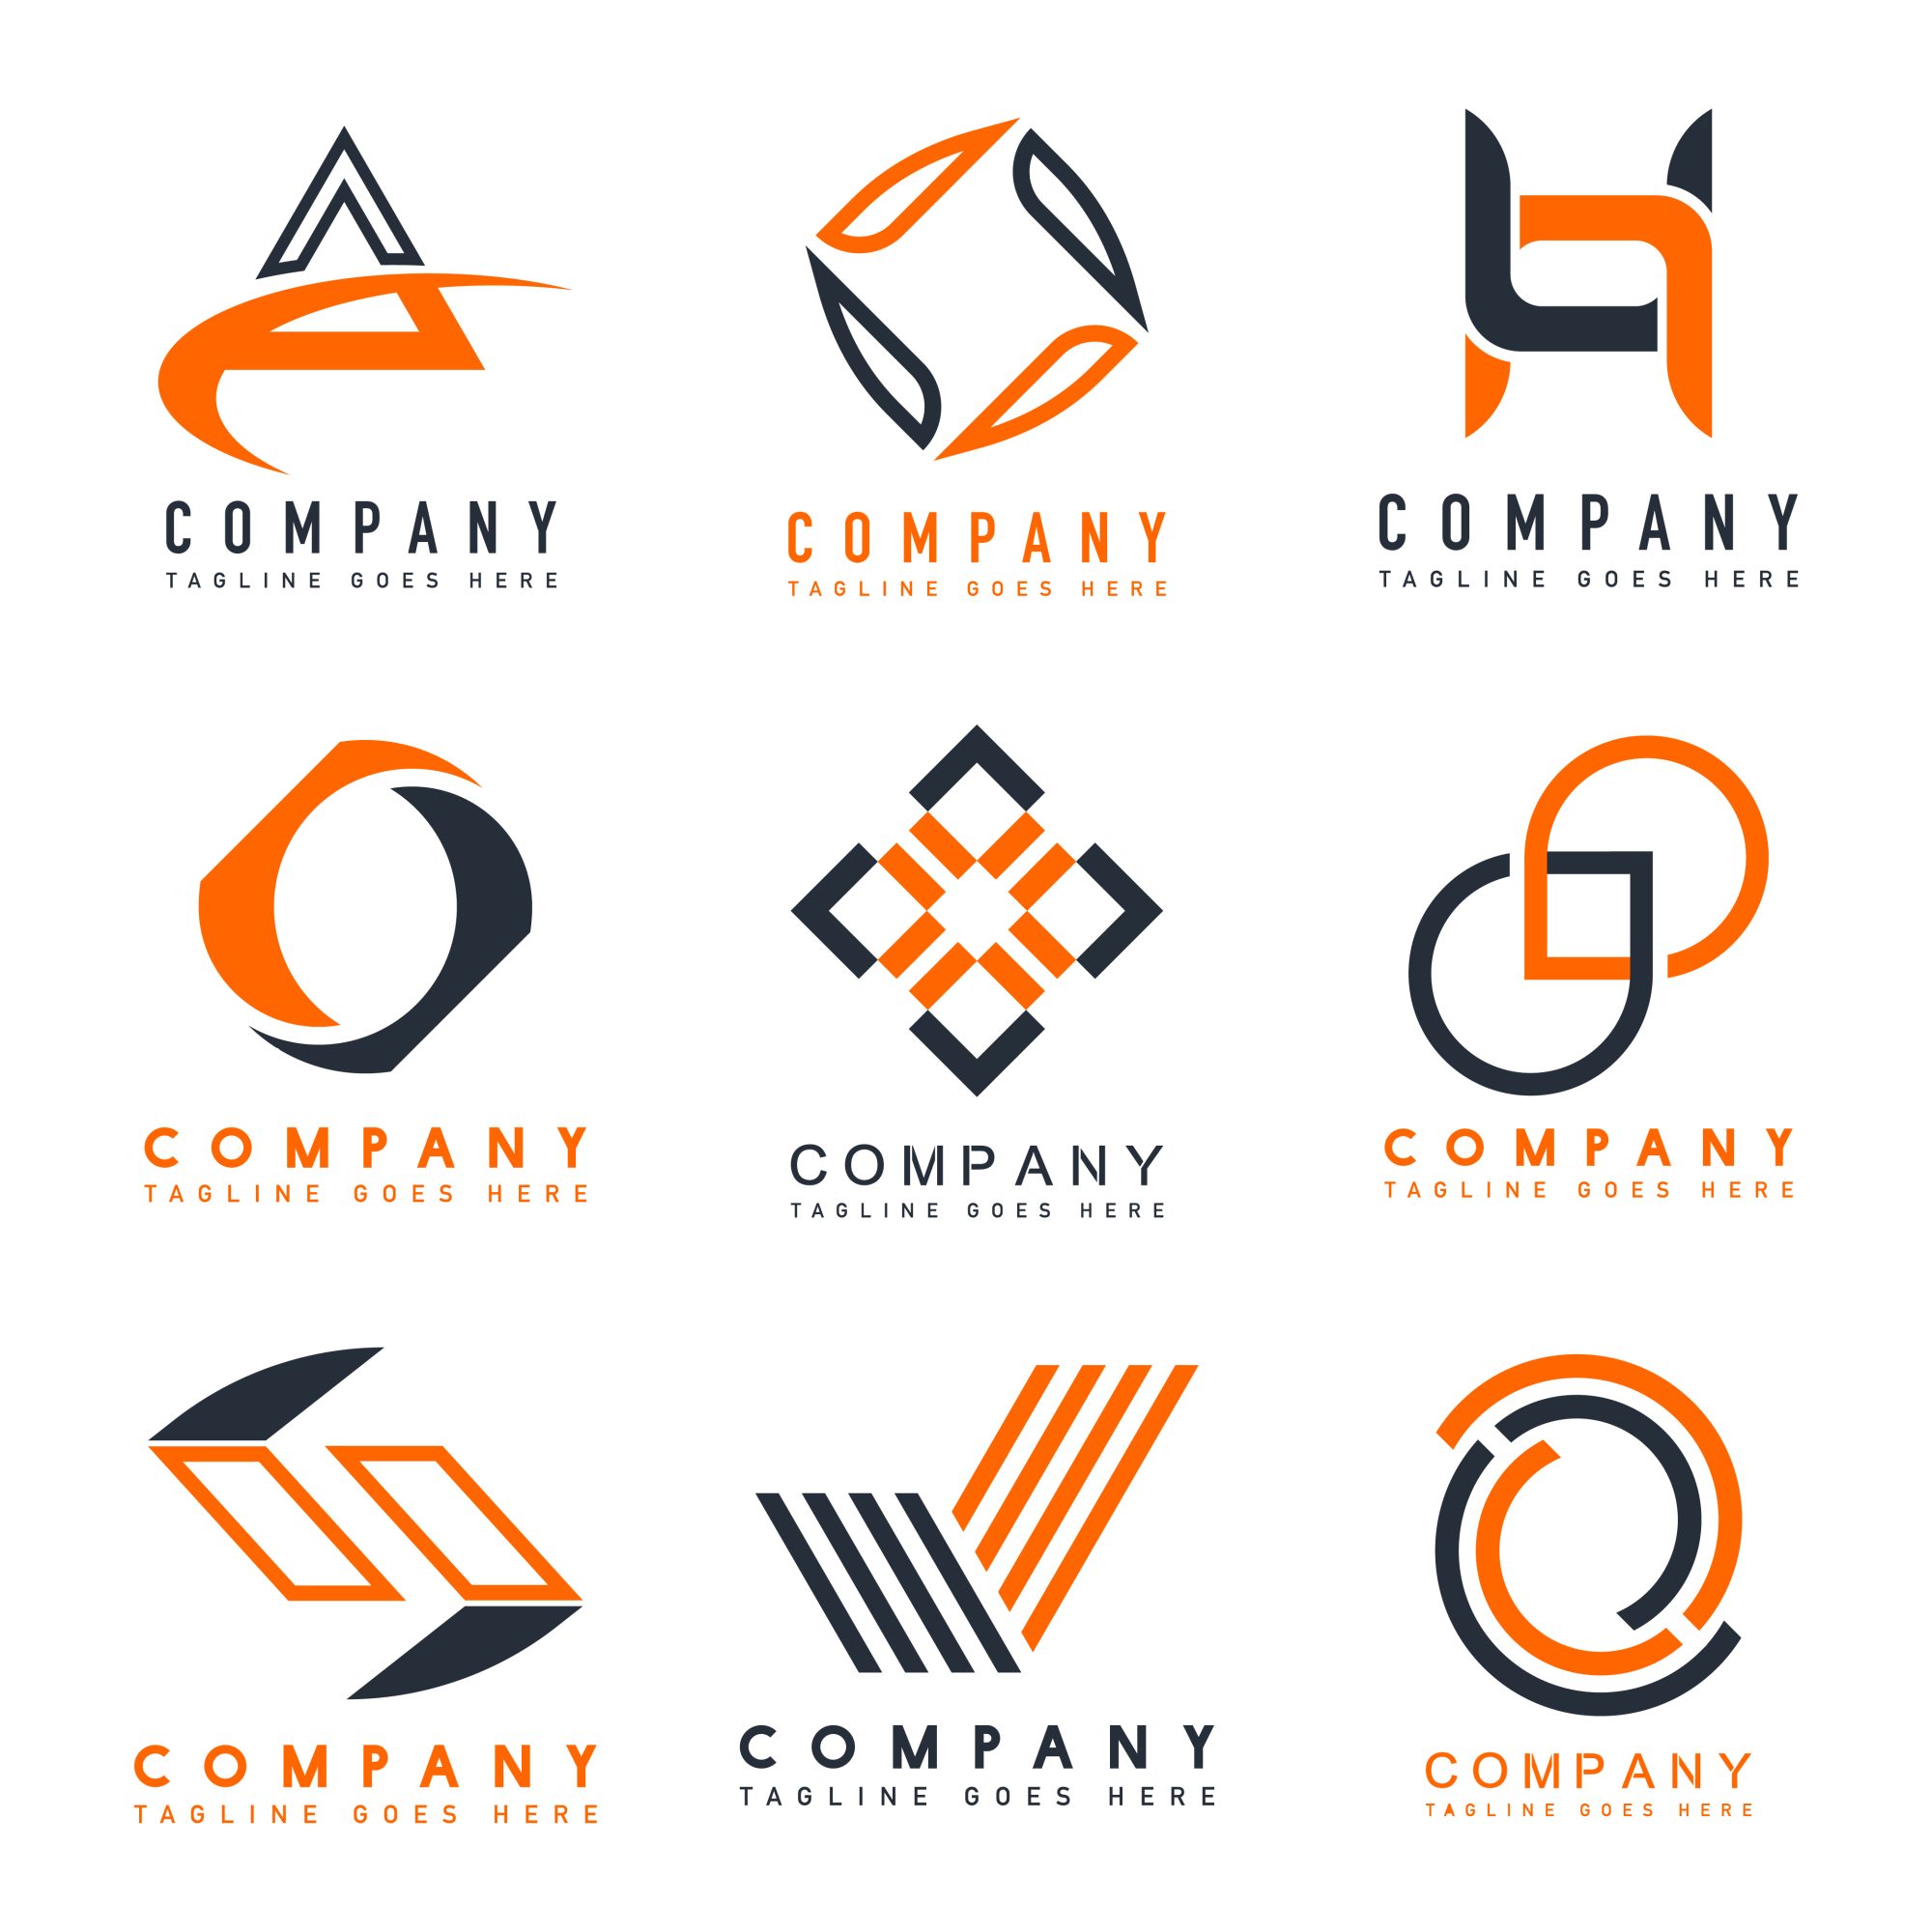 Custom Designed Logos